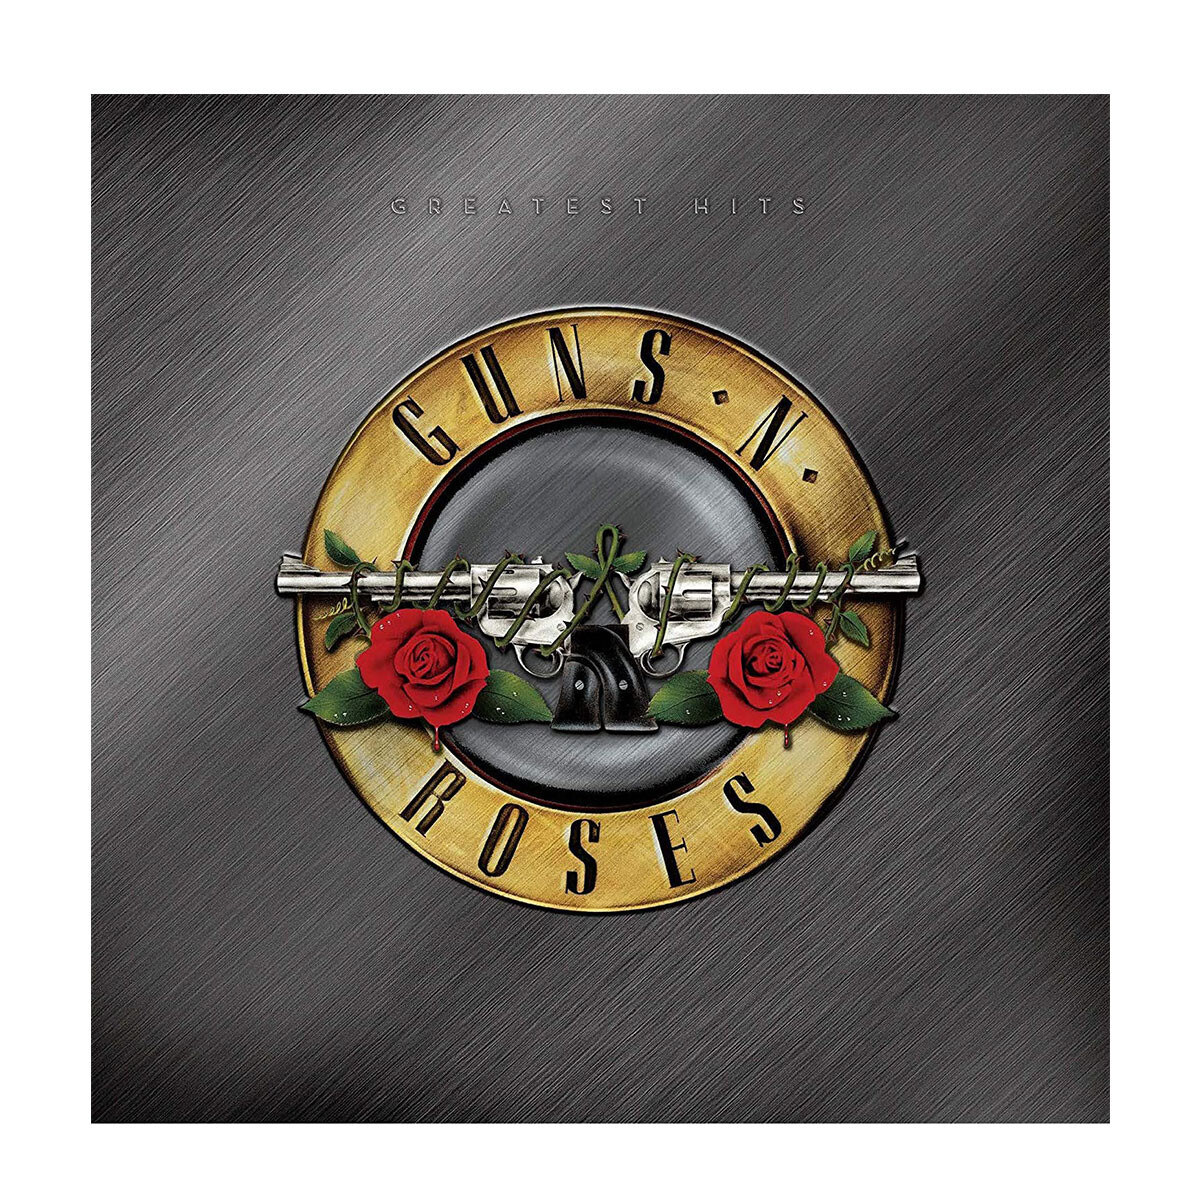 Las mejores ofertas en Guns N 'Roses discos de vinilo de vinilo de color